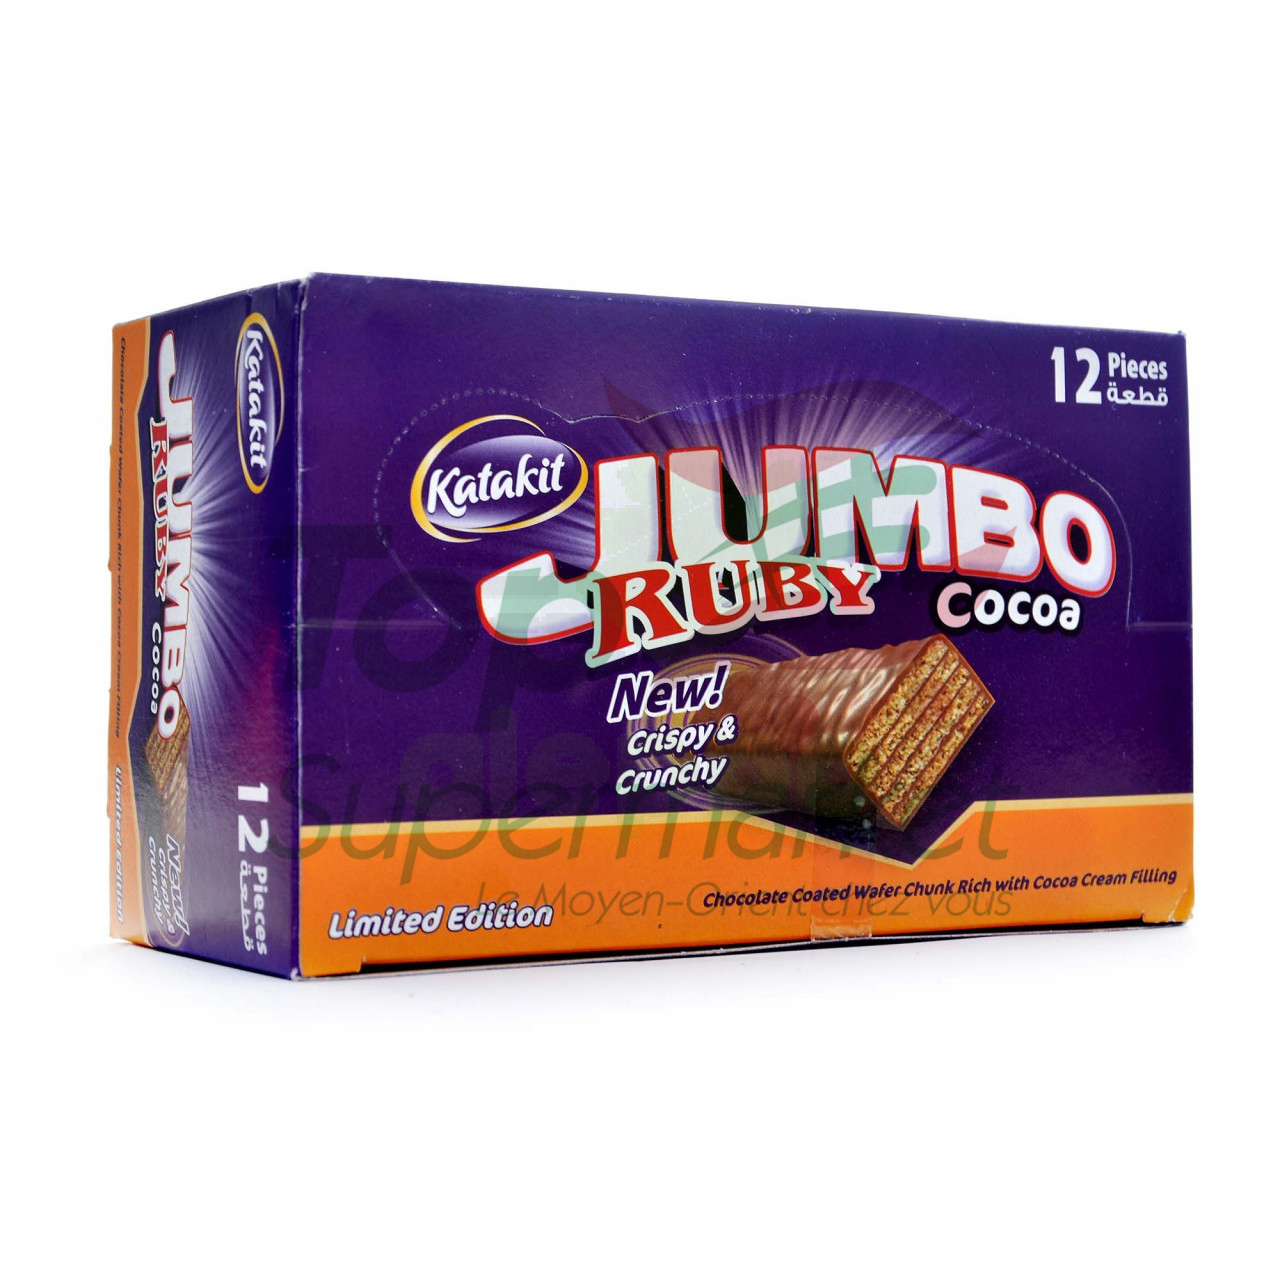 Ruby Jumbo Cacao 276g